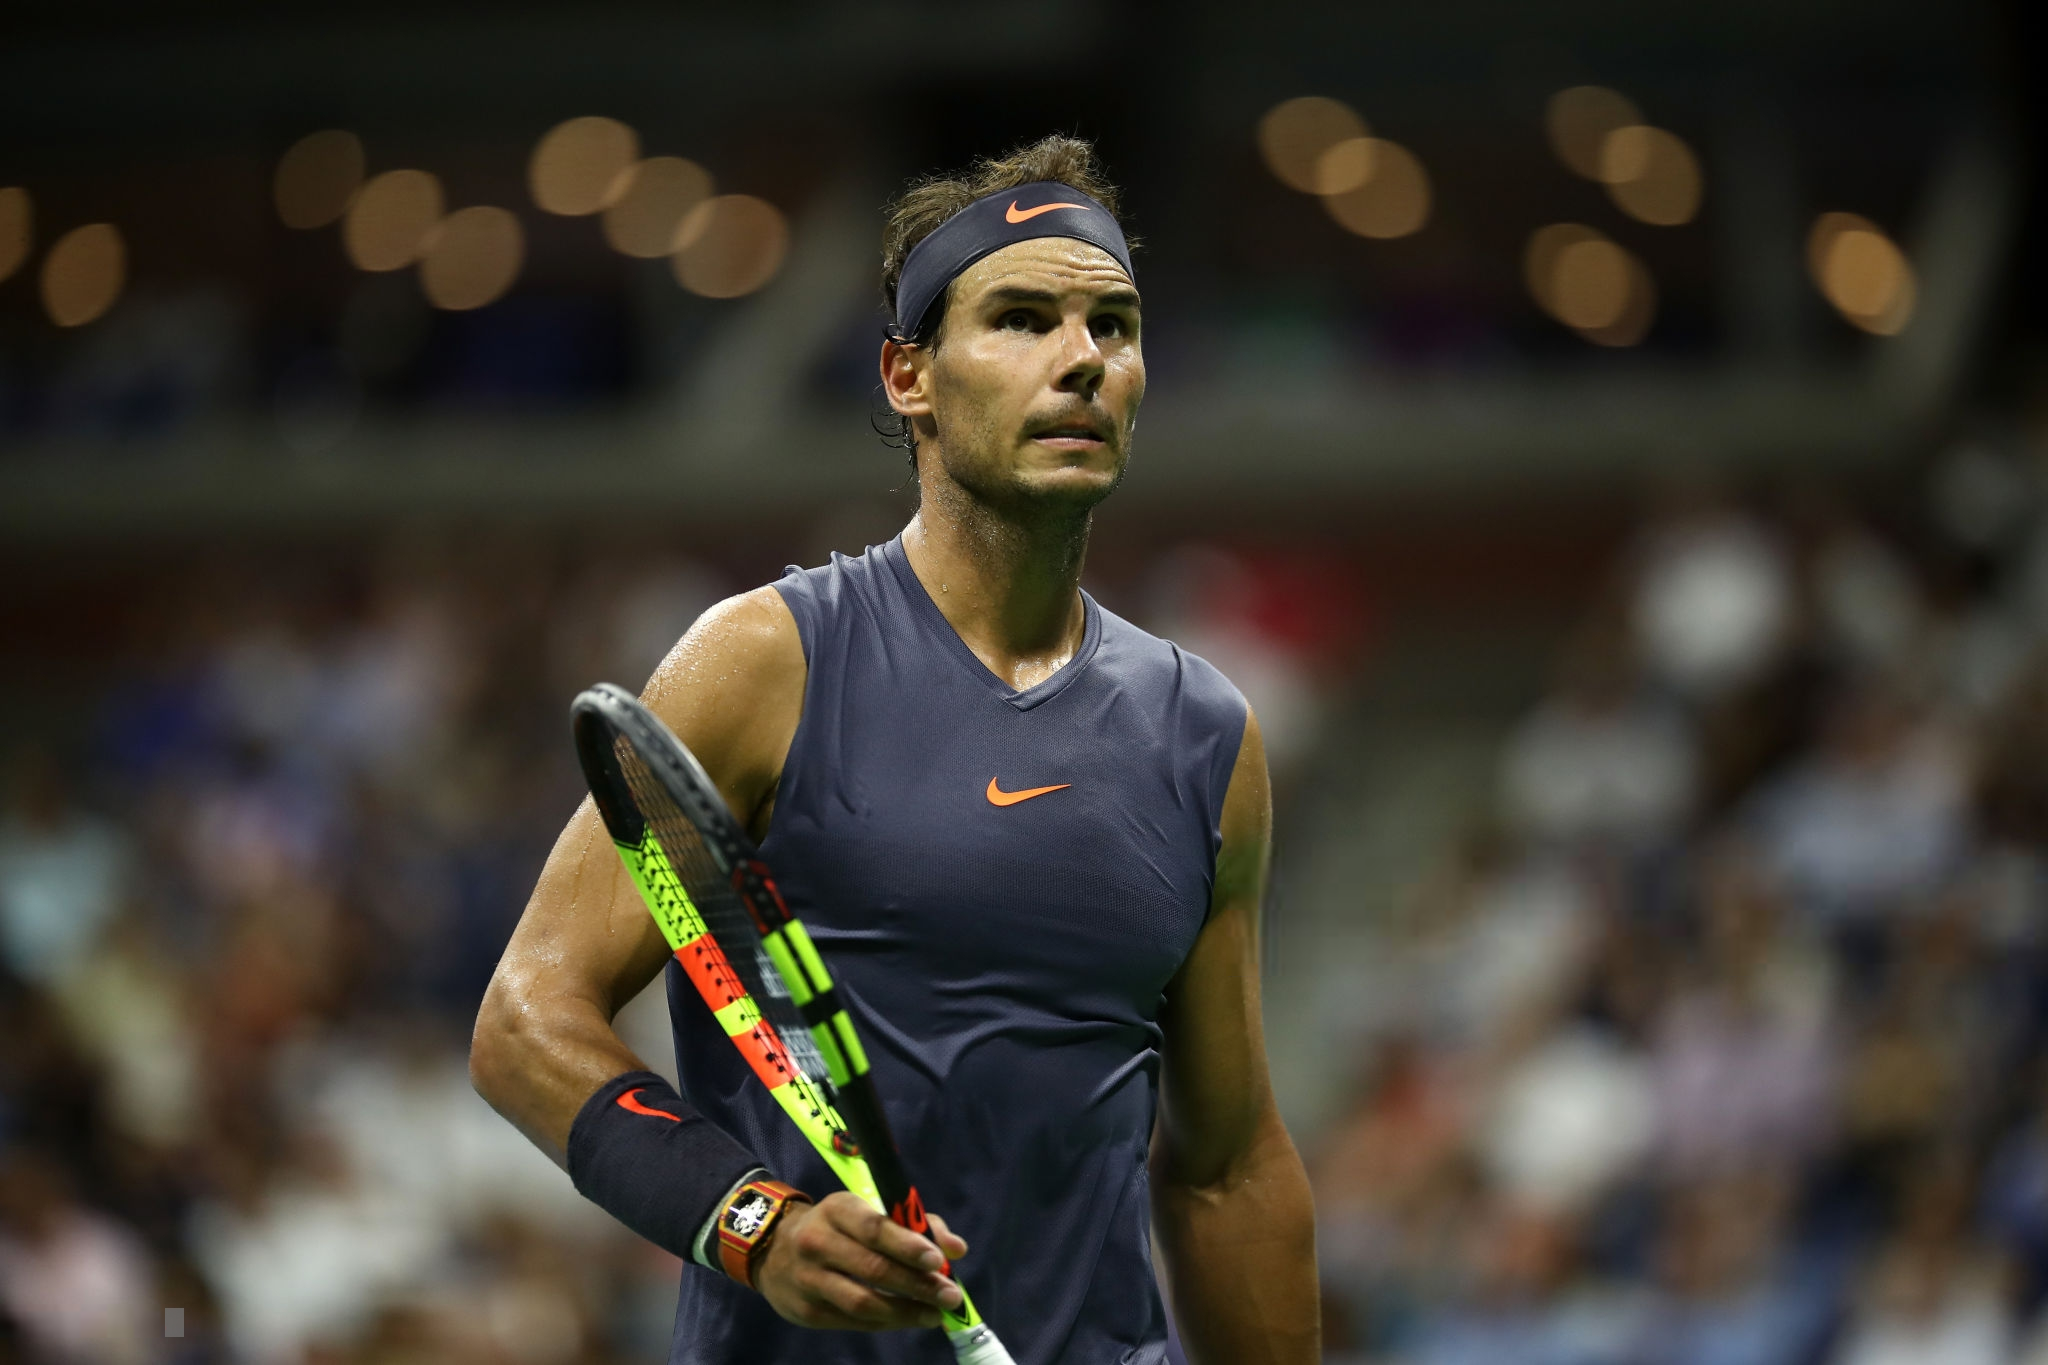 PHOTOS: Rafael Nadal powers into US Open third round – Rafael Nadal Fans2048 x 1365